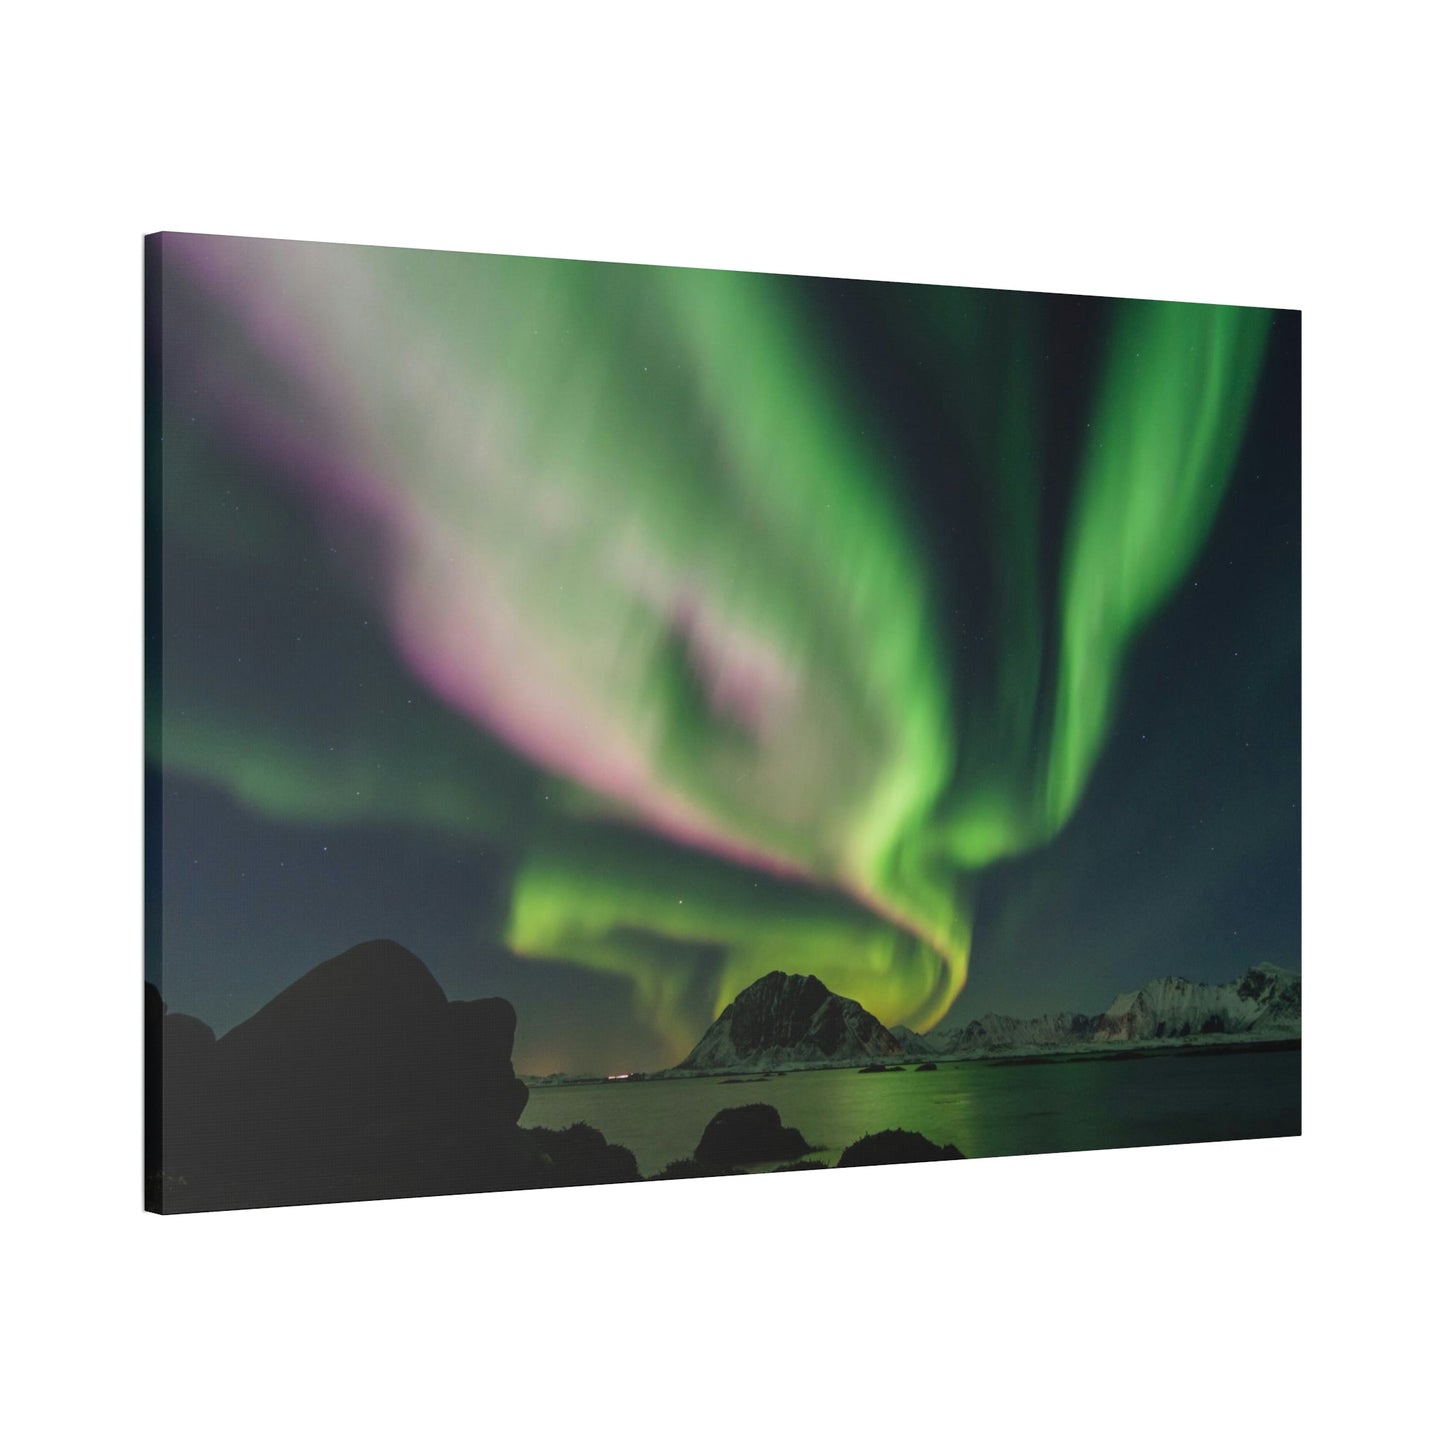 Aurora Borealis Kaleidoscope: A Multicolored Display of Wonder